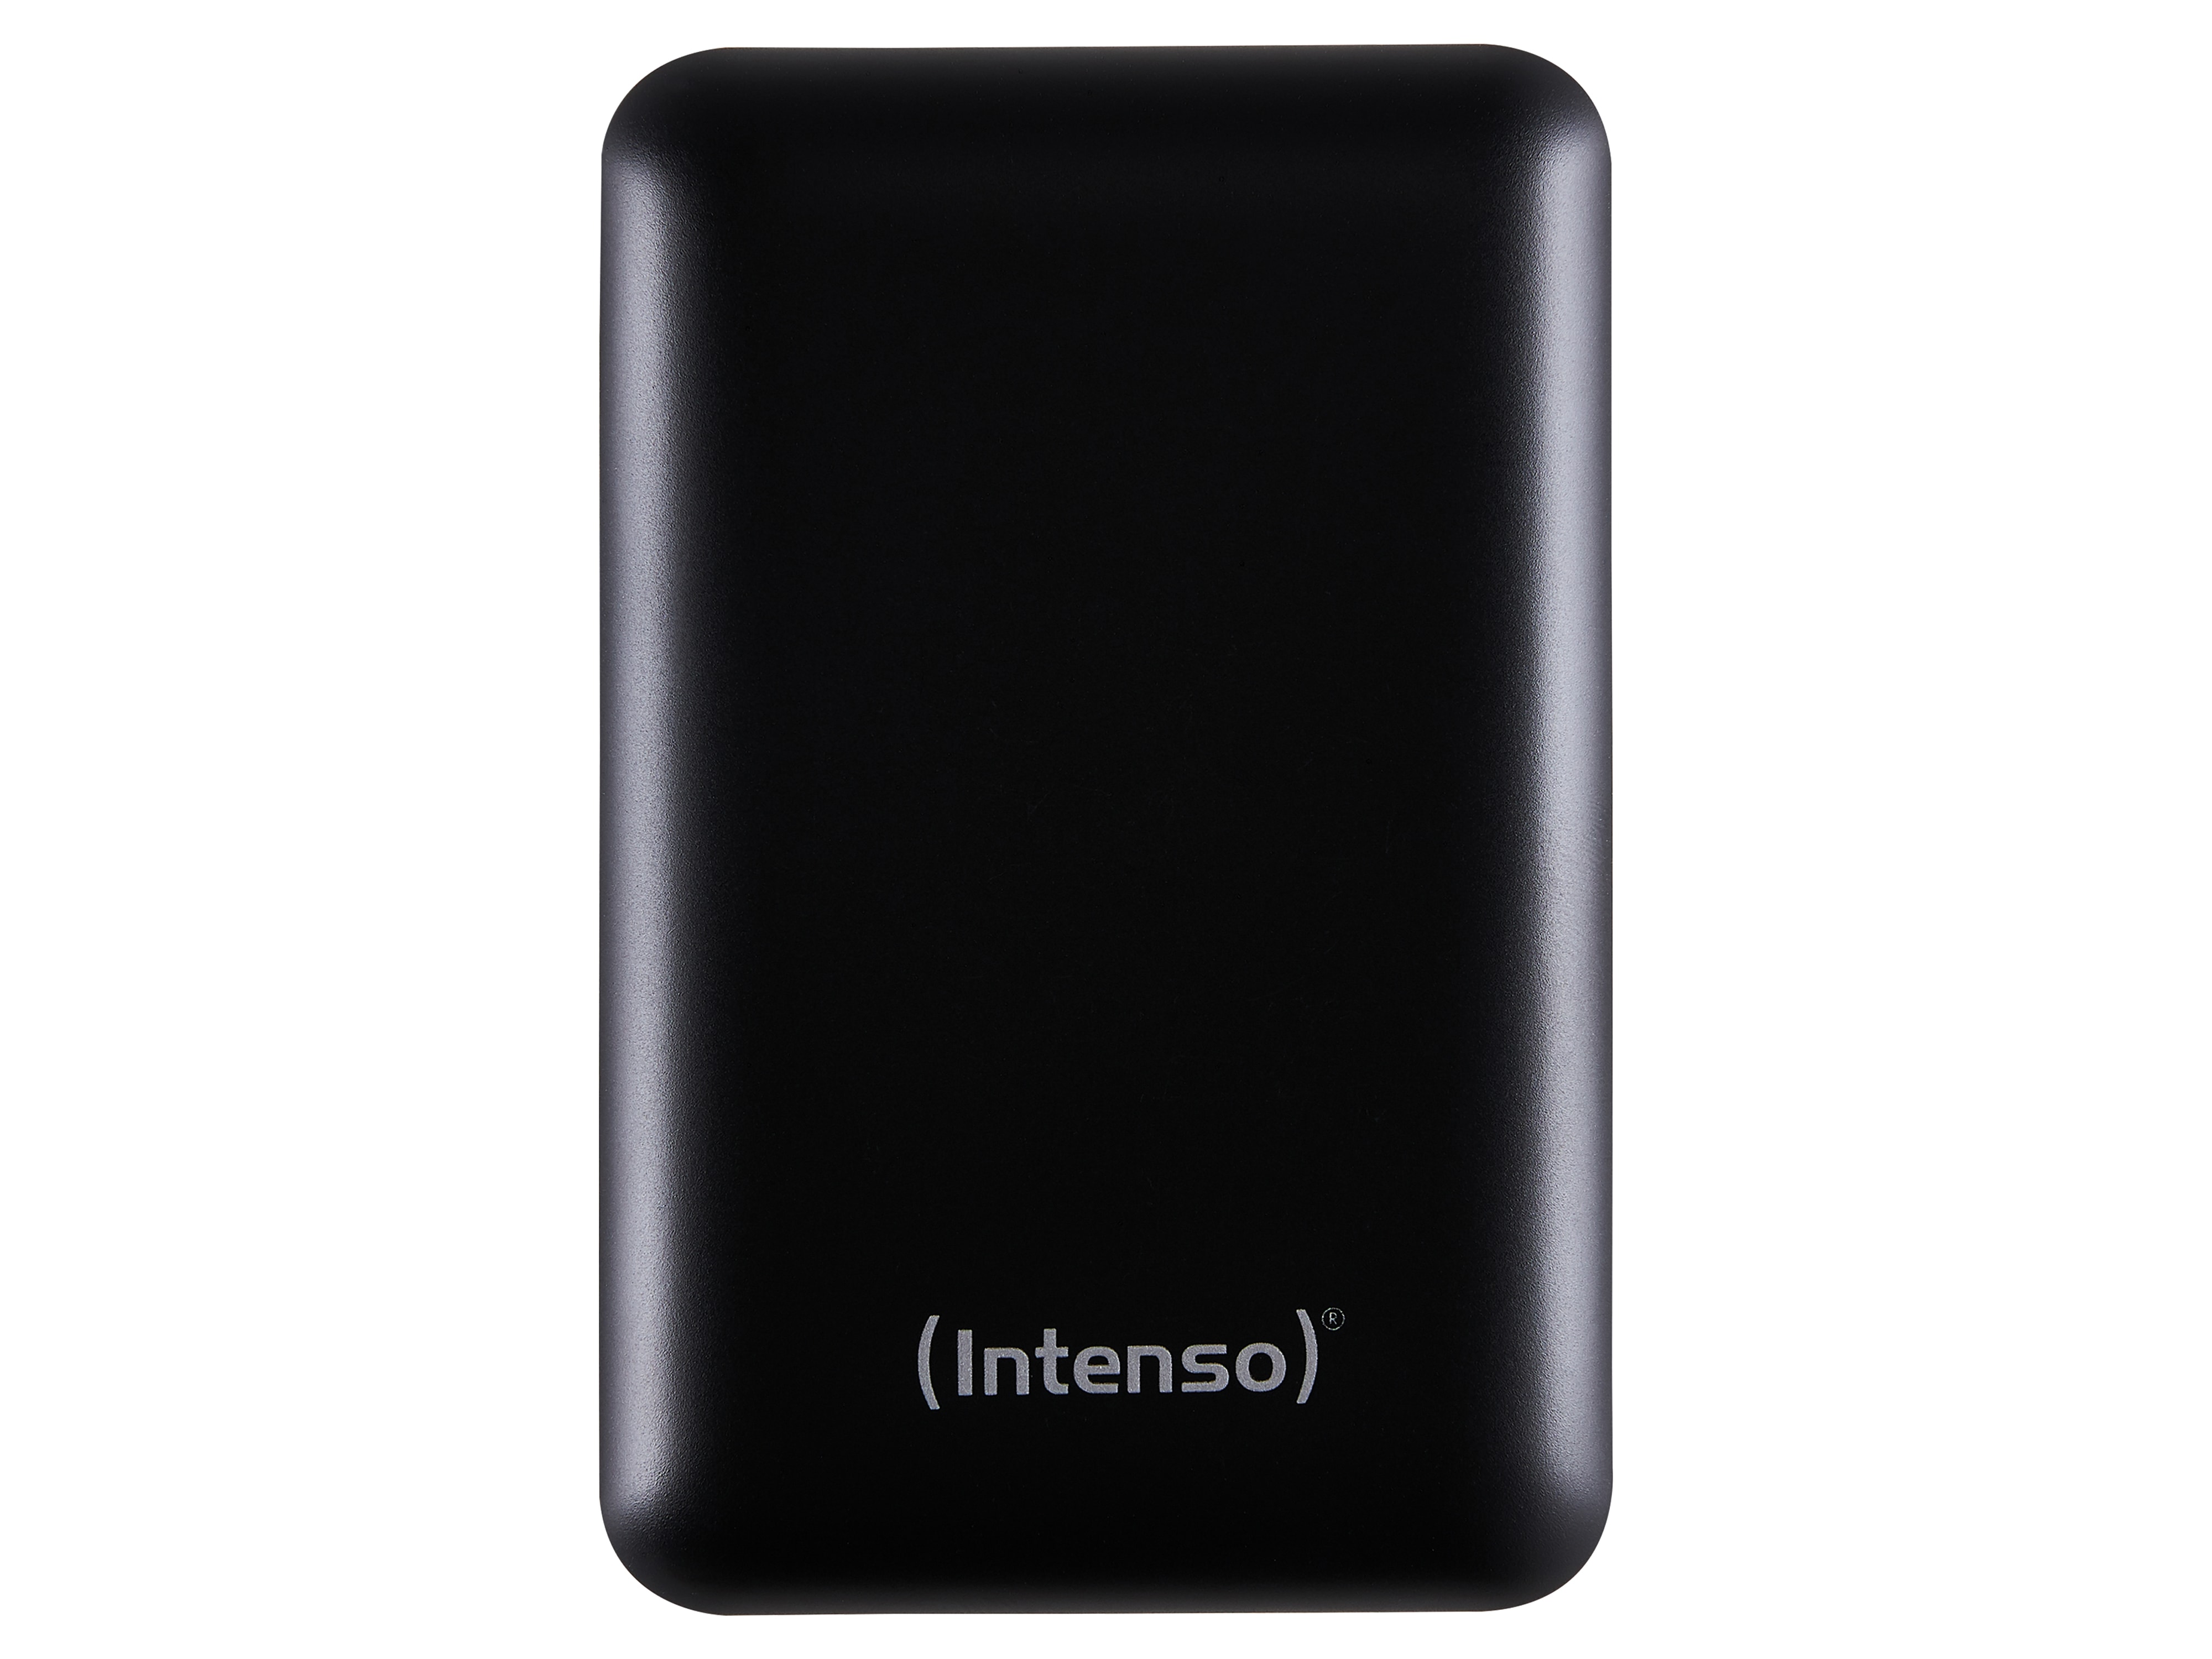 INTENSO USB Powerbank 7314530 XC 10000, 10.000 mAh, schwarz